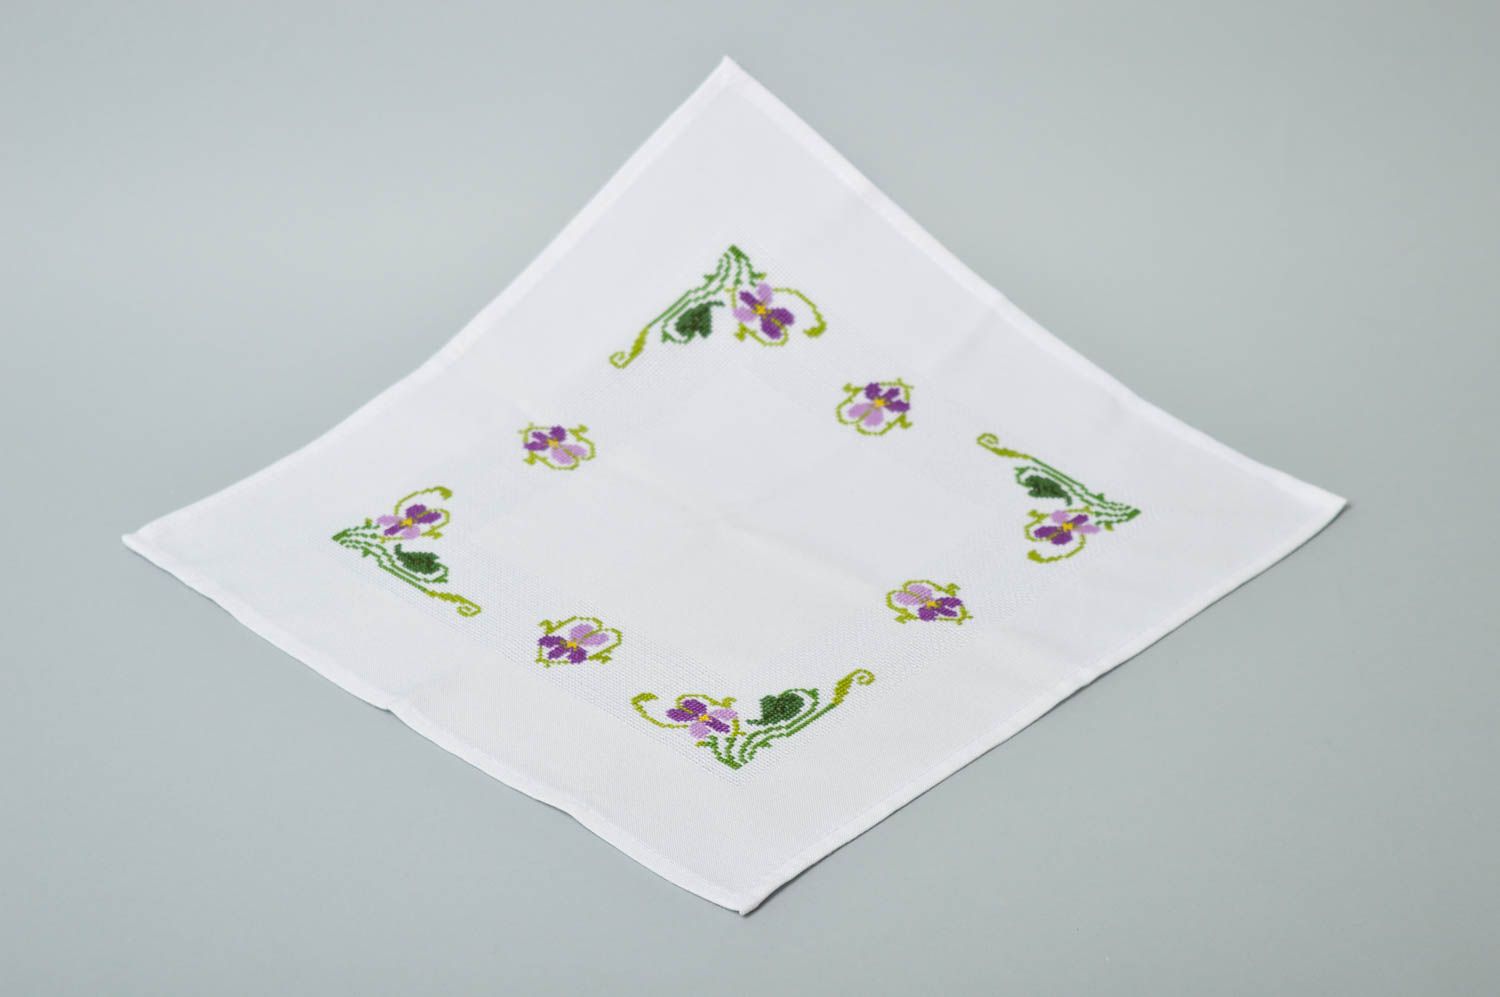 Beautiful handmade textile napkin home textiles table decor ideas small gifts photo 2